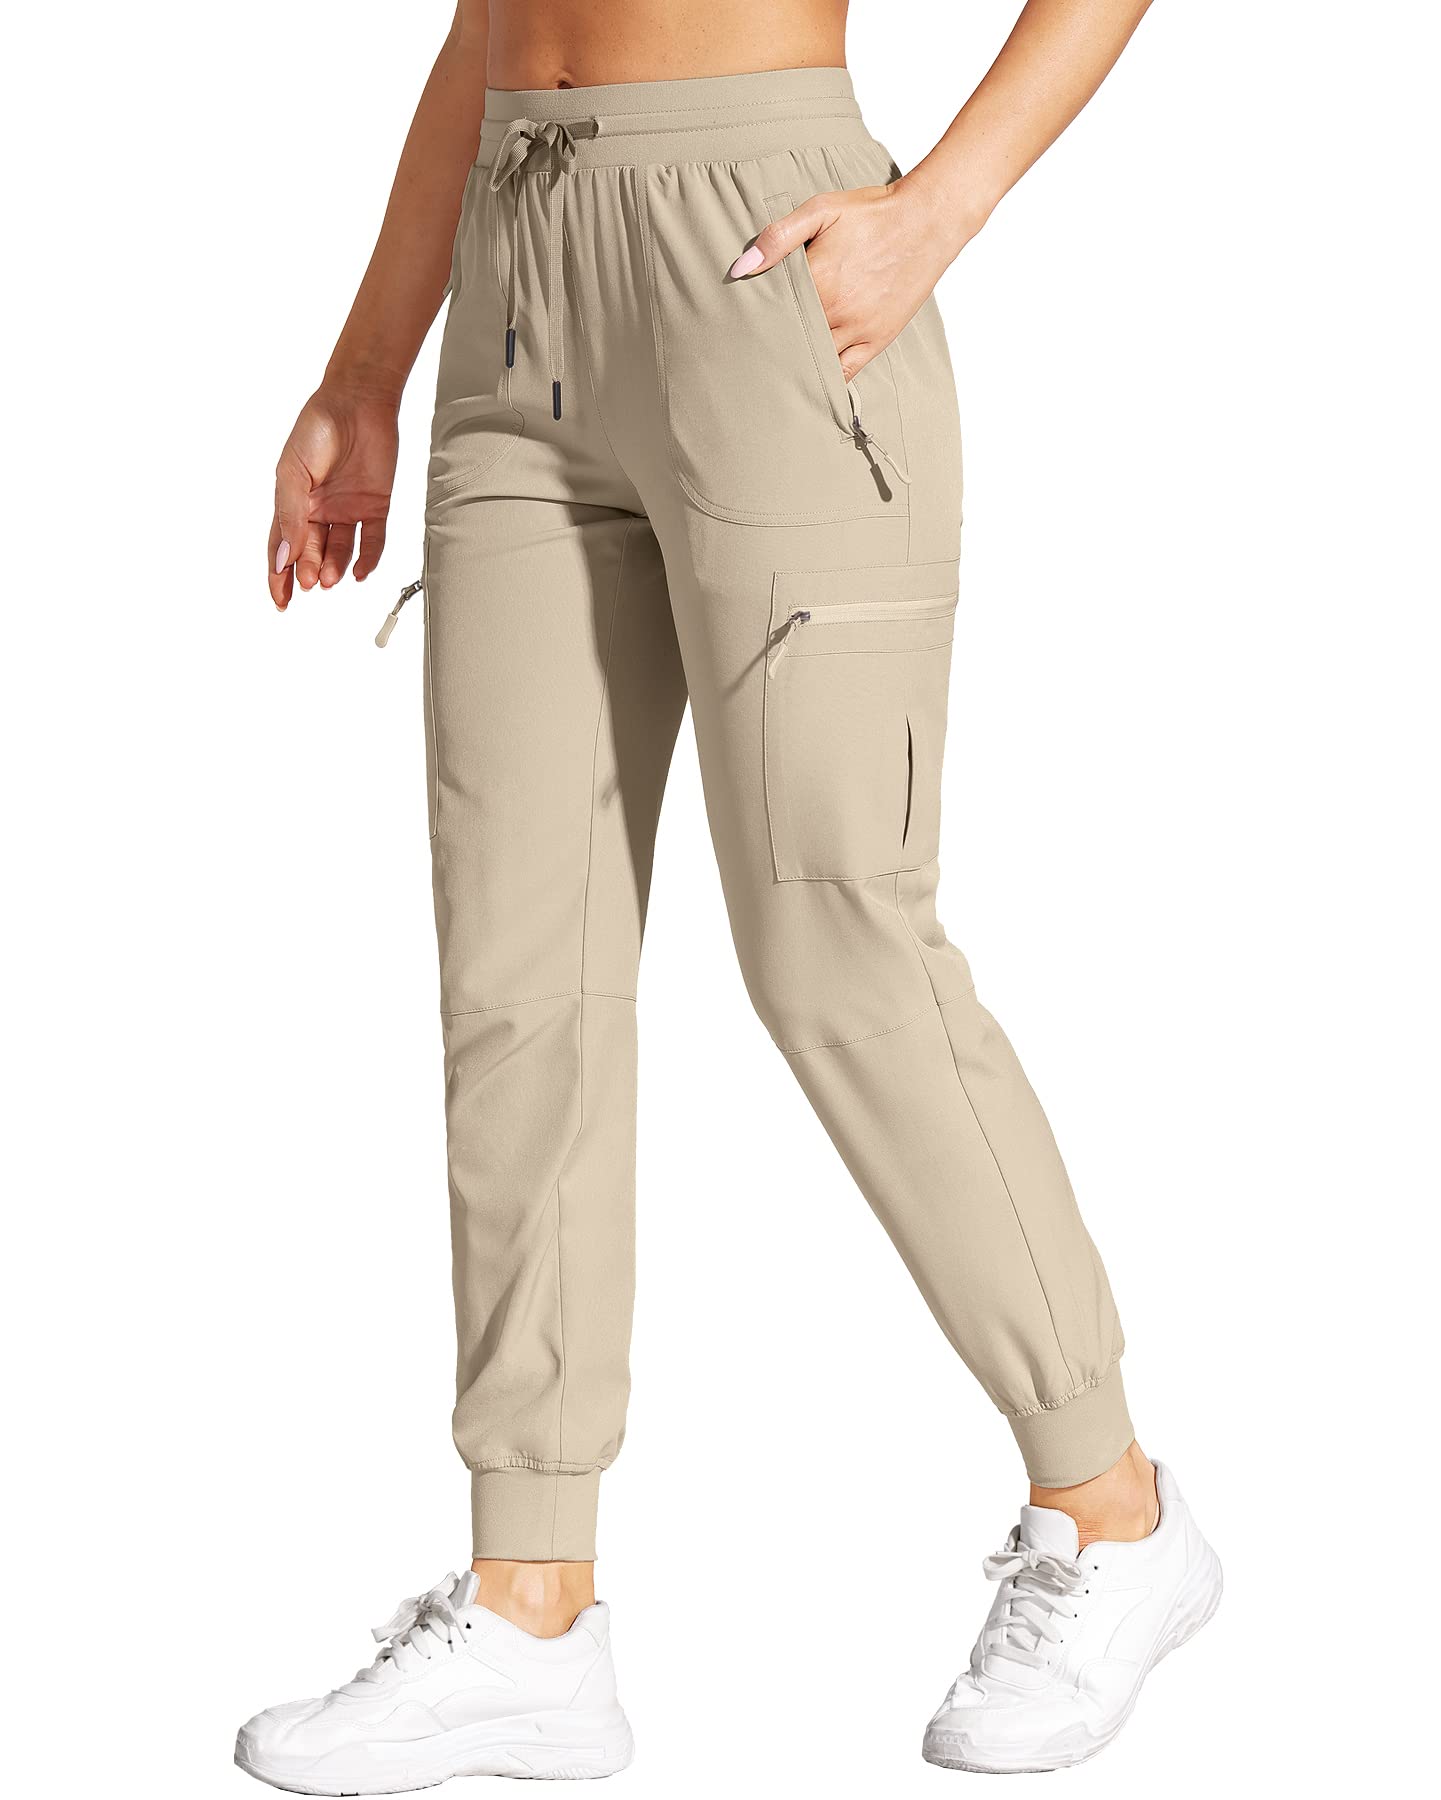 Zip-Pocket Hiking Pants, Lightweight Pants